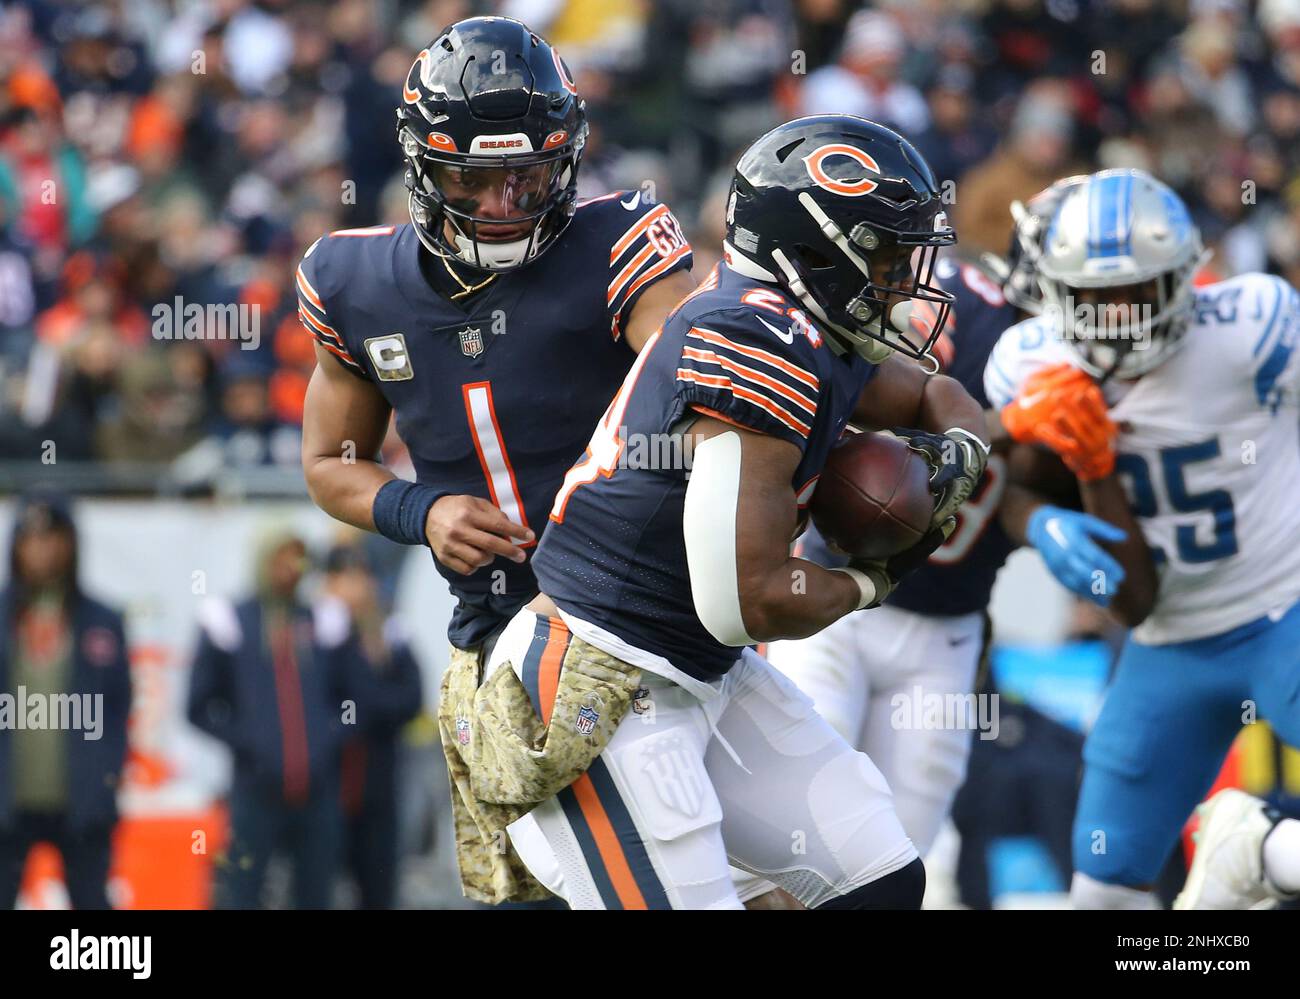 CHICAGO, IL - NOVEMBER 13: Chicago Bears quarterback Justin Fields